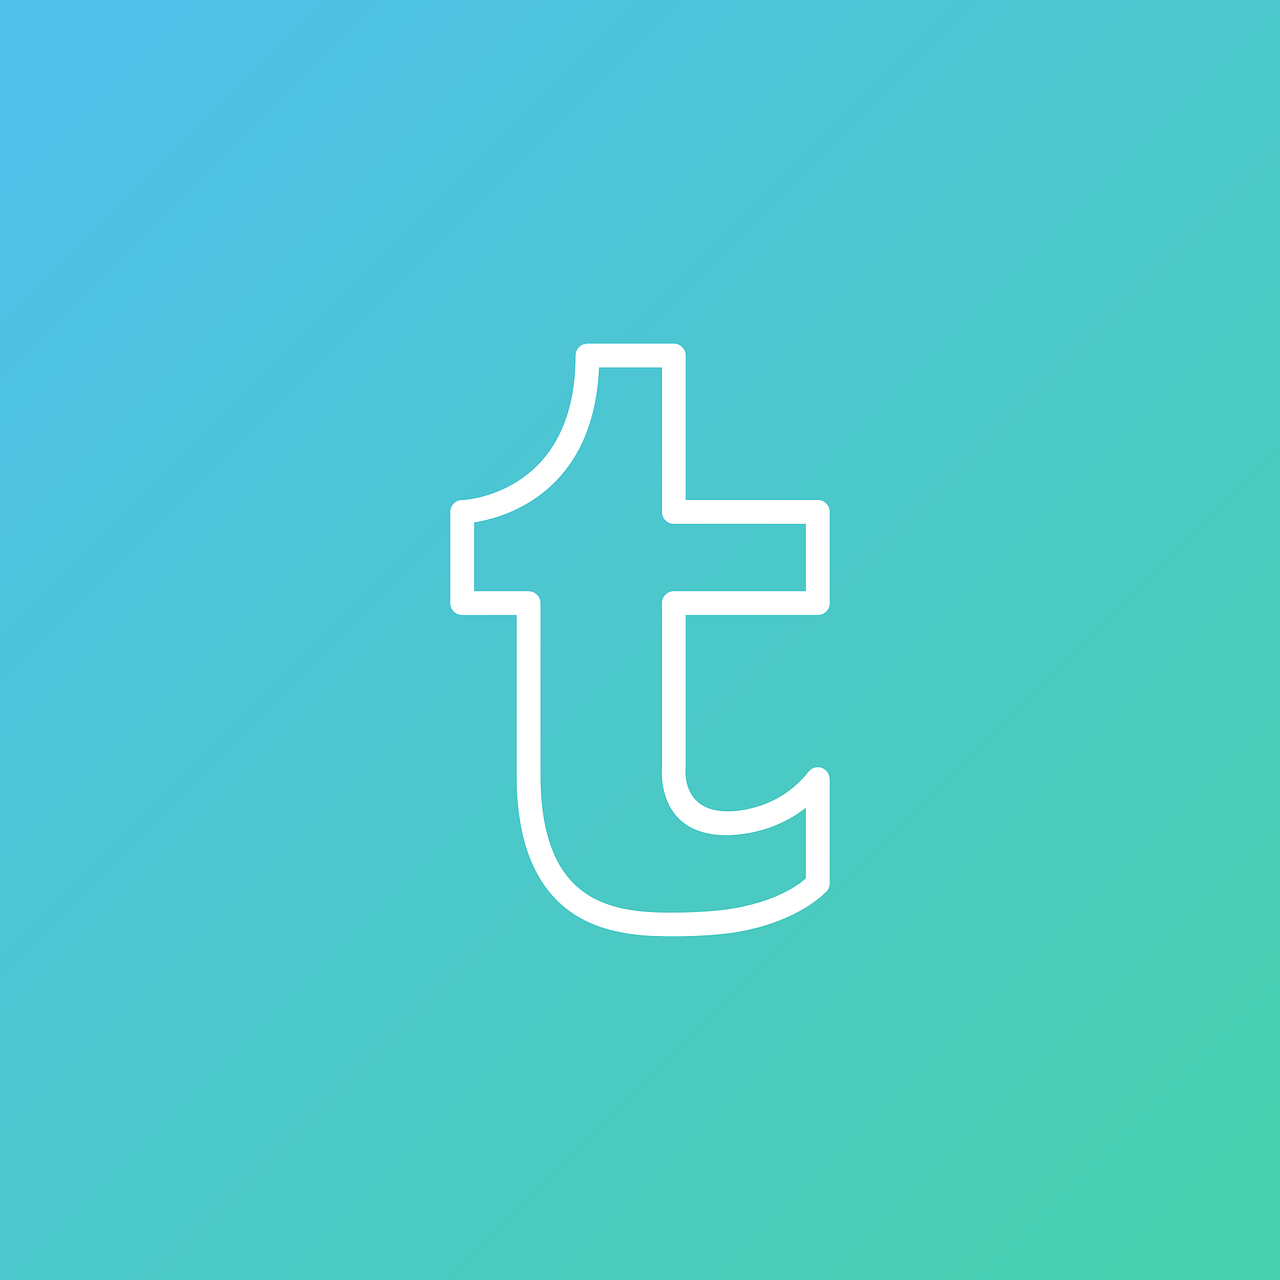 Tumblr,  Tumblr Piktograma,  Tumblr Logotipas,  Tumblr Simbolis,  Socialiniai Tinklai,  Tinklai,  Internetas,  Tinklas,  Socialinė,  Socialinis Tinklas